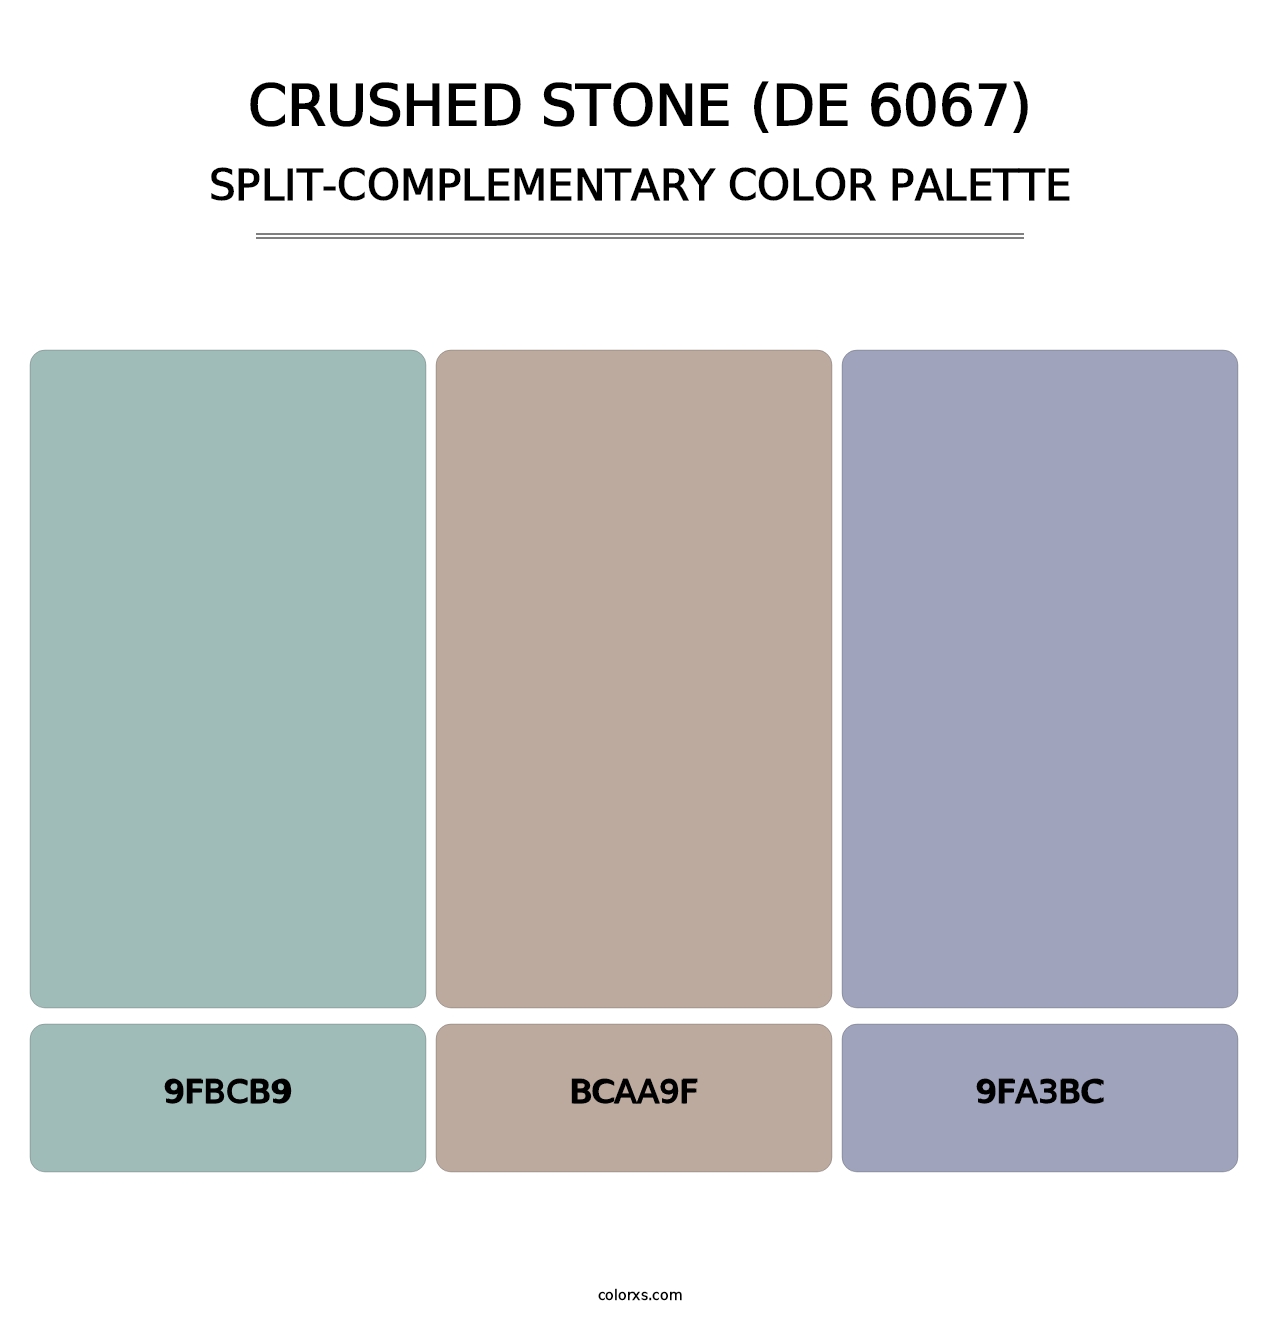 Crushed Stone (DE 6067) - Split-Complementary Color Palette